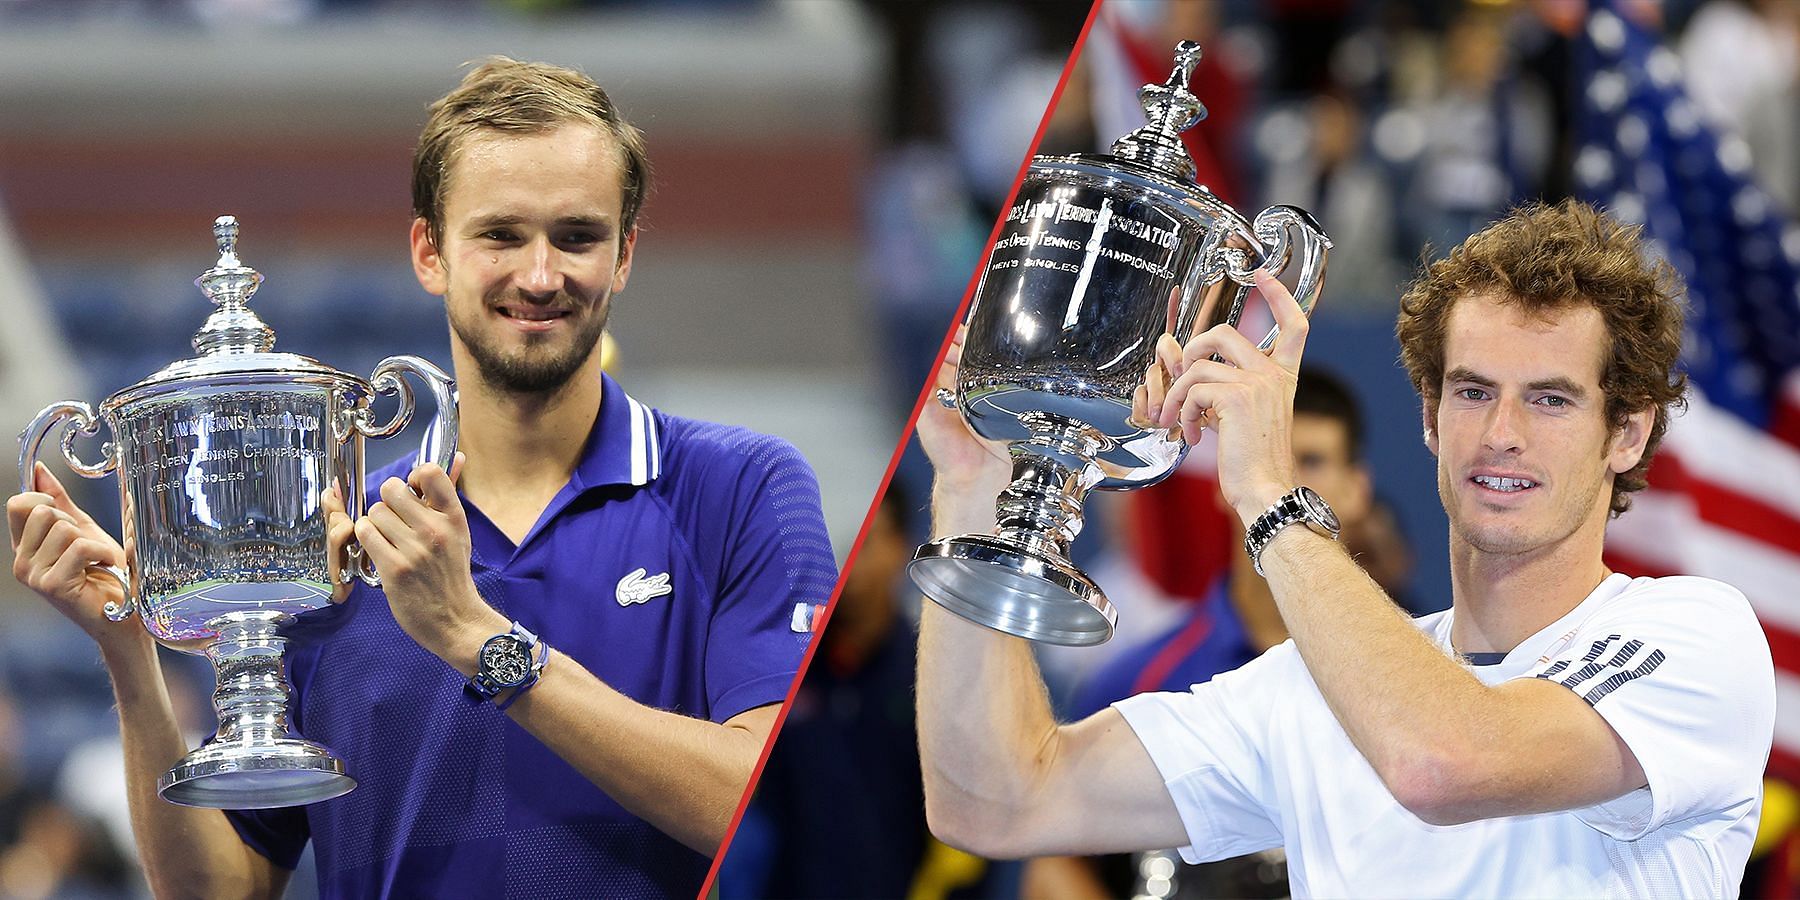 Daniil Medvedev made his Grand Slam breakthrough at the US Open last year.